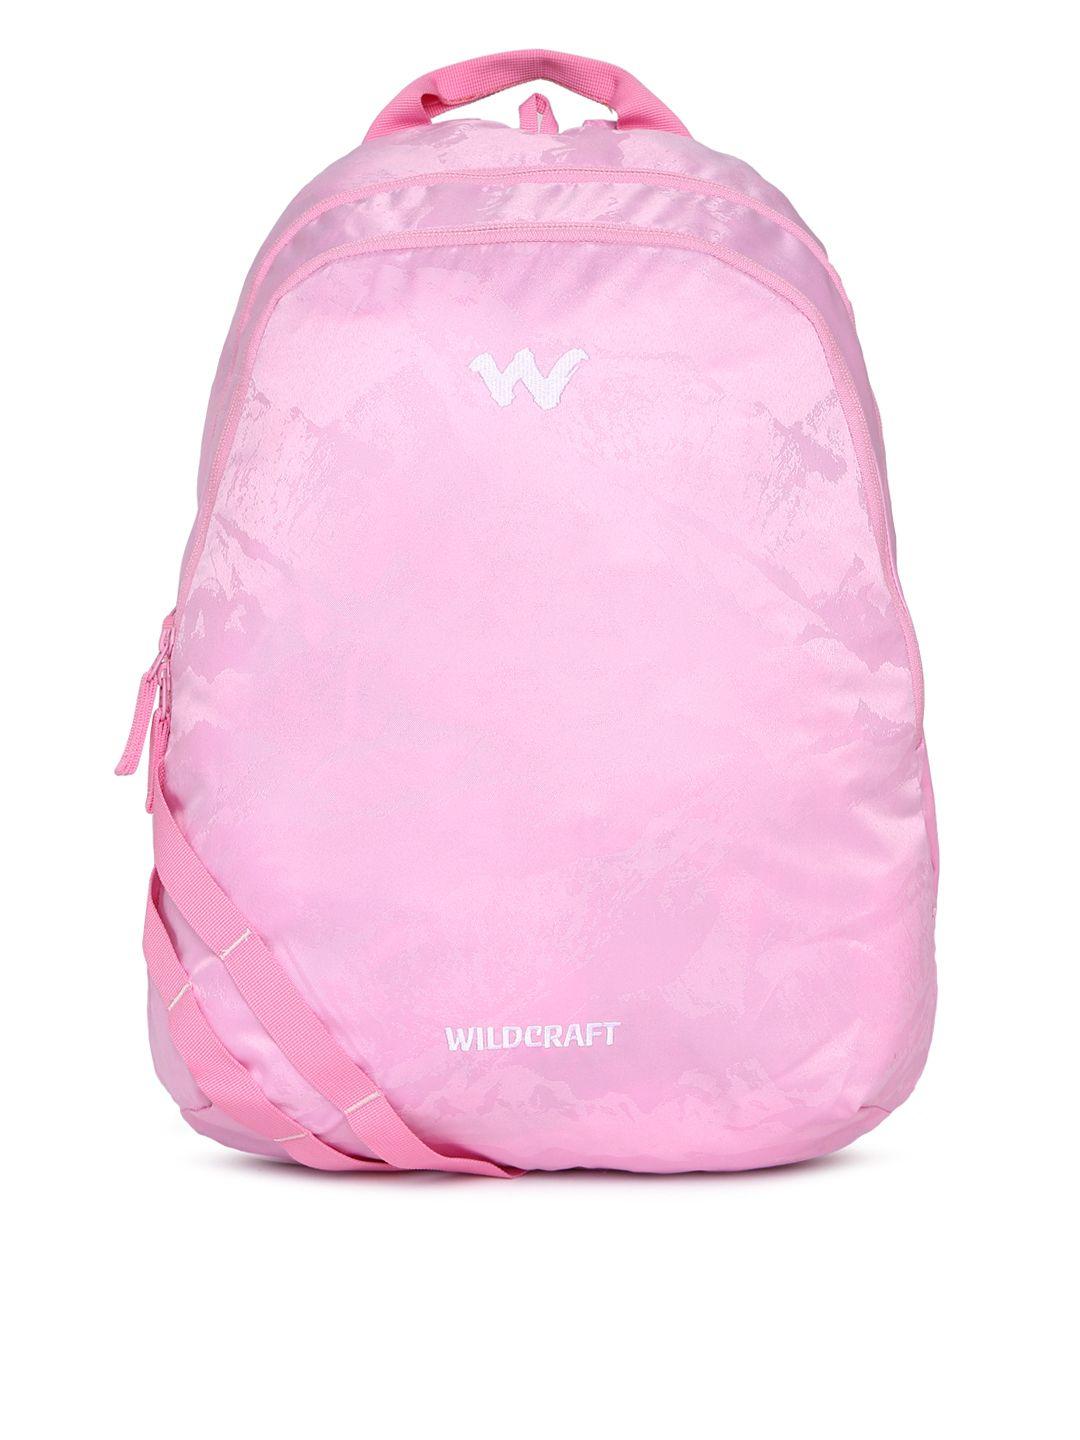 wildcraft unisex pink brand logo backpack